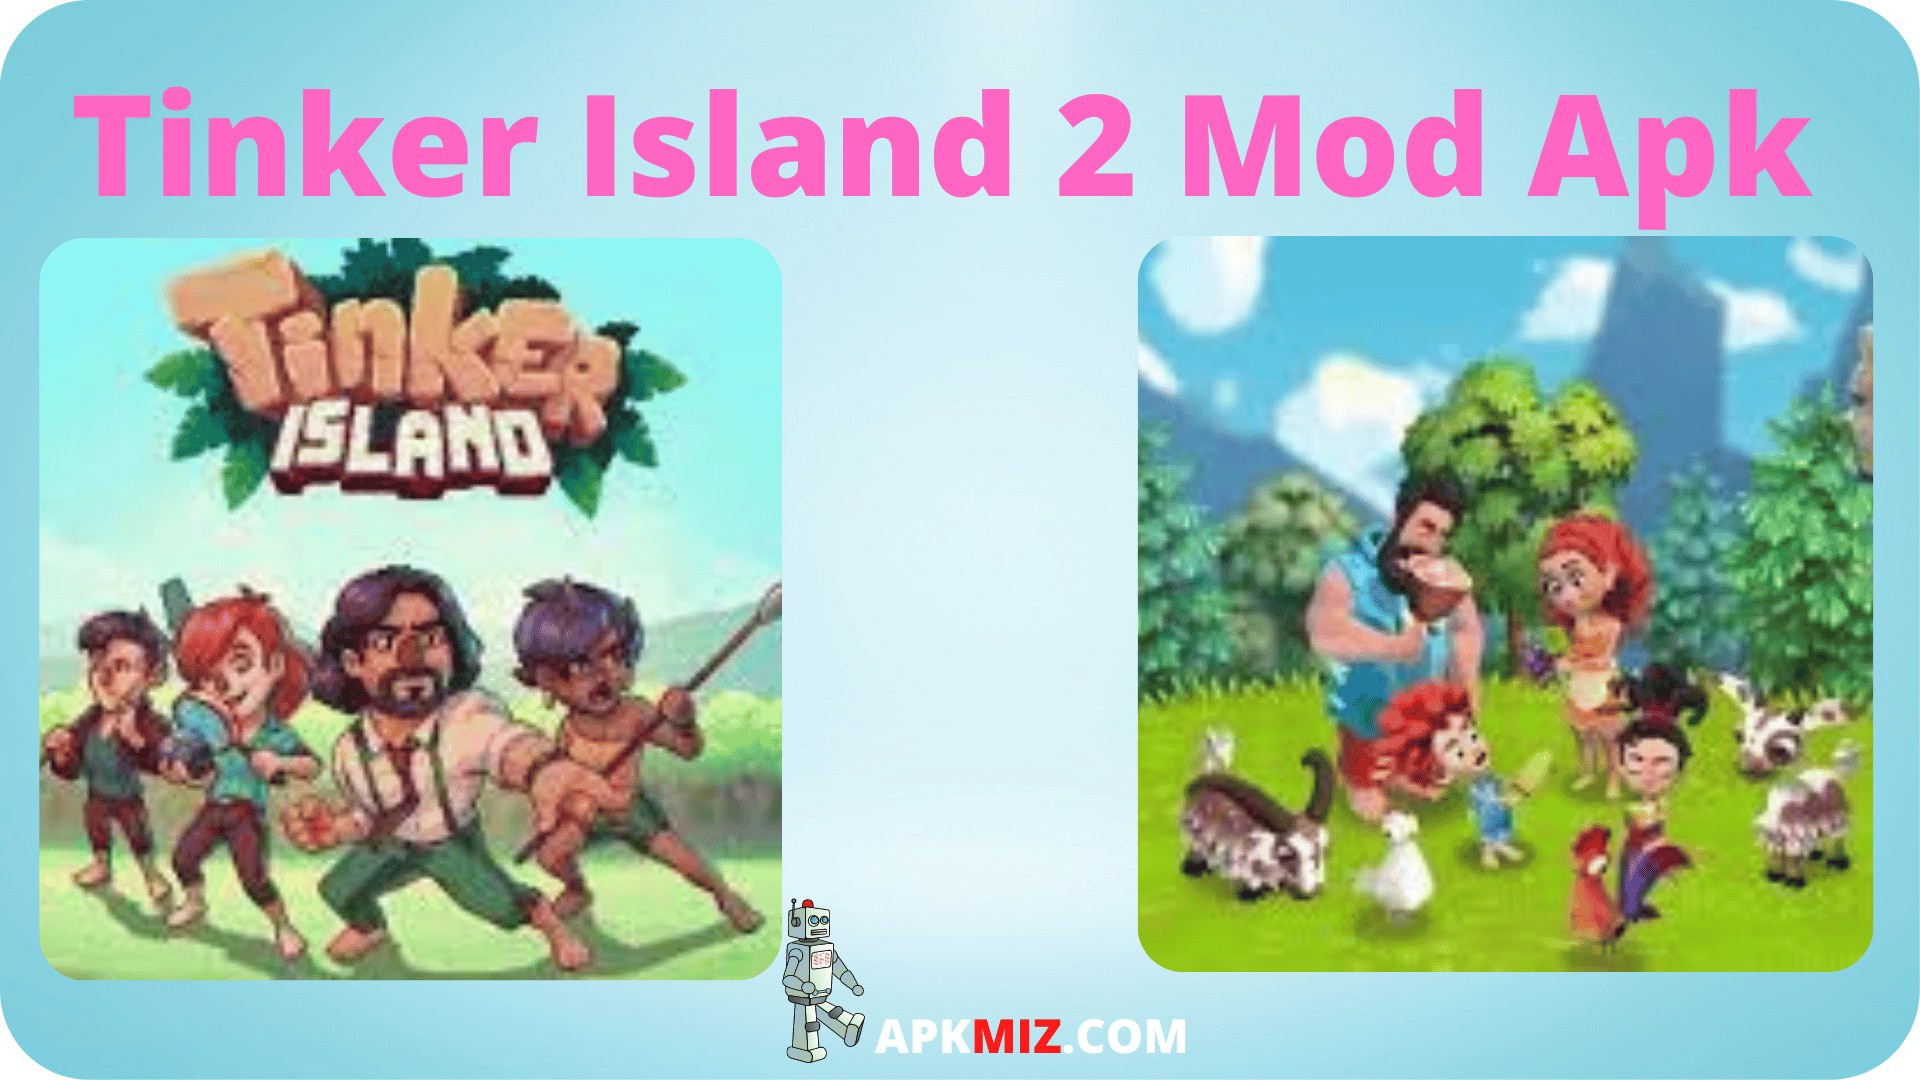 Tinker Island 2 Mod Apk